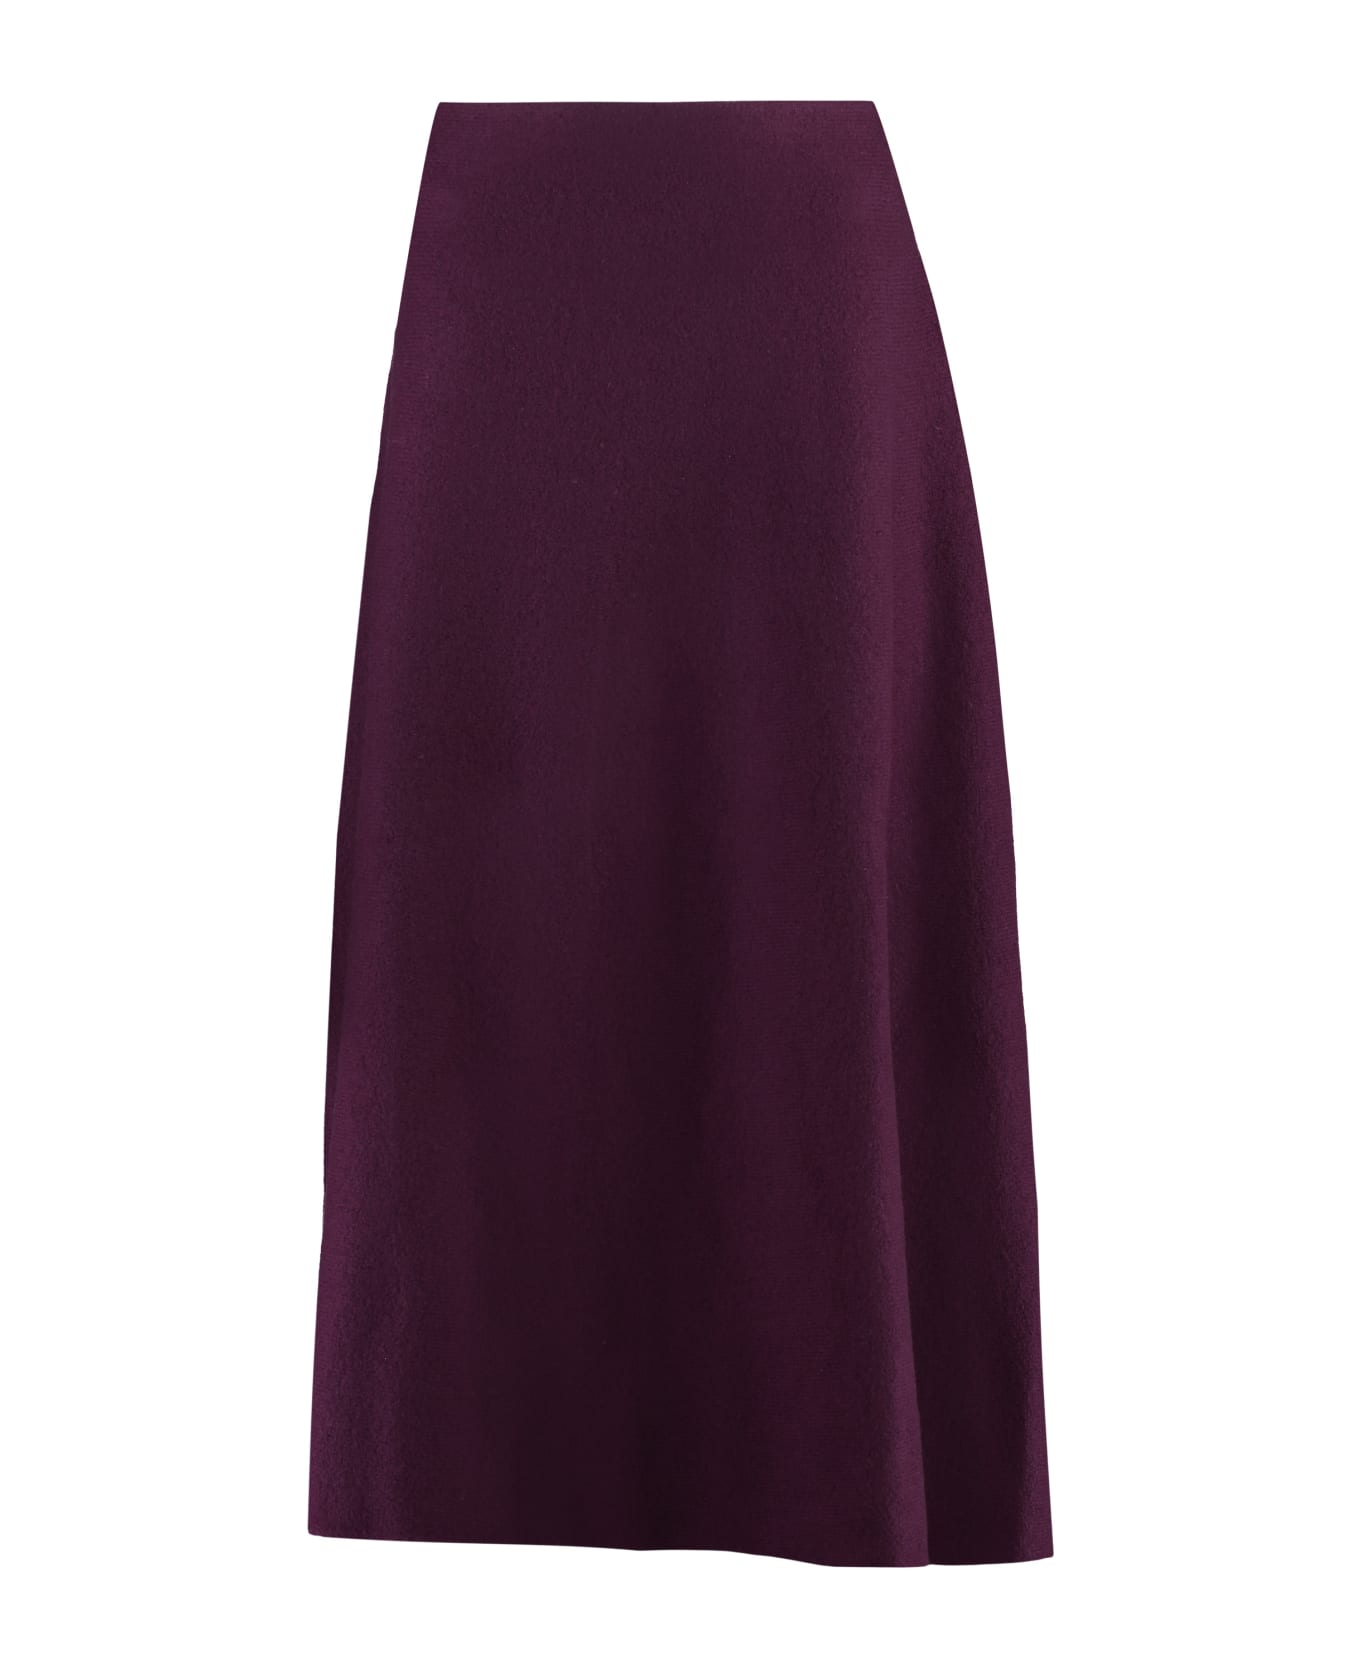 Jil Sander Wool Skirt - Red-purple or grape スカート